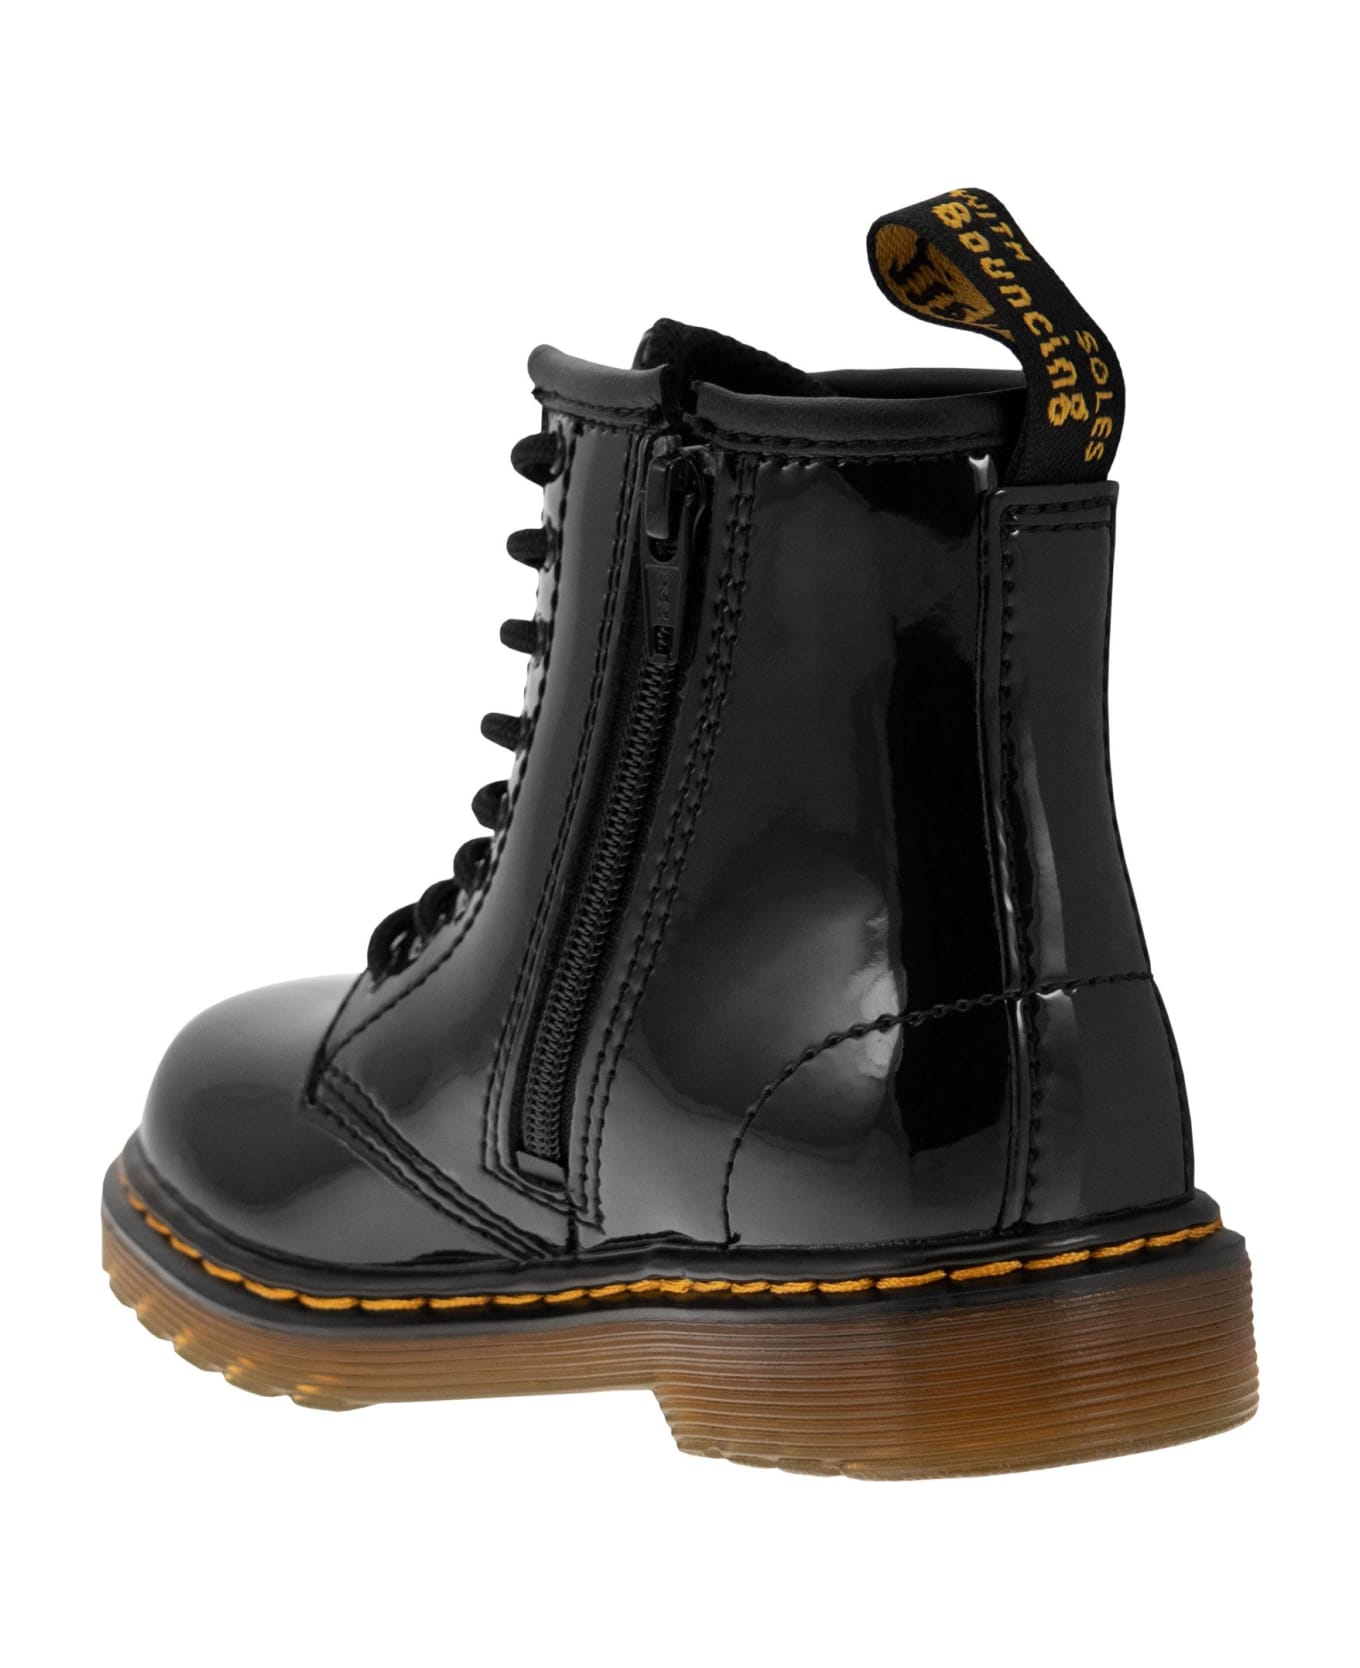 Dr. Martens 1460 - Patent Leather Lace-up Boots - Black シューズ